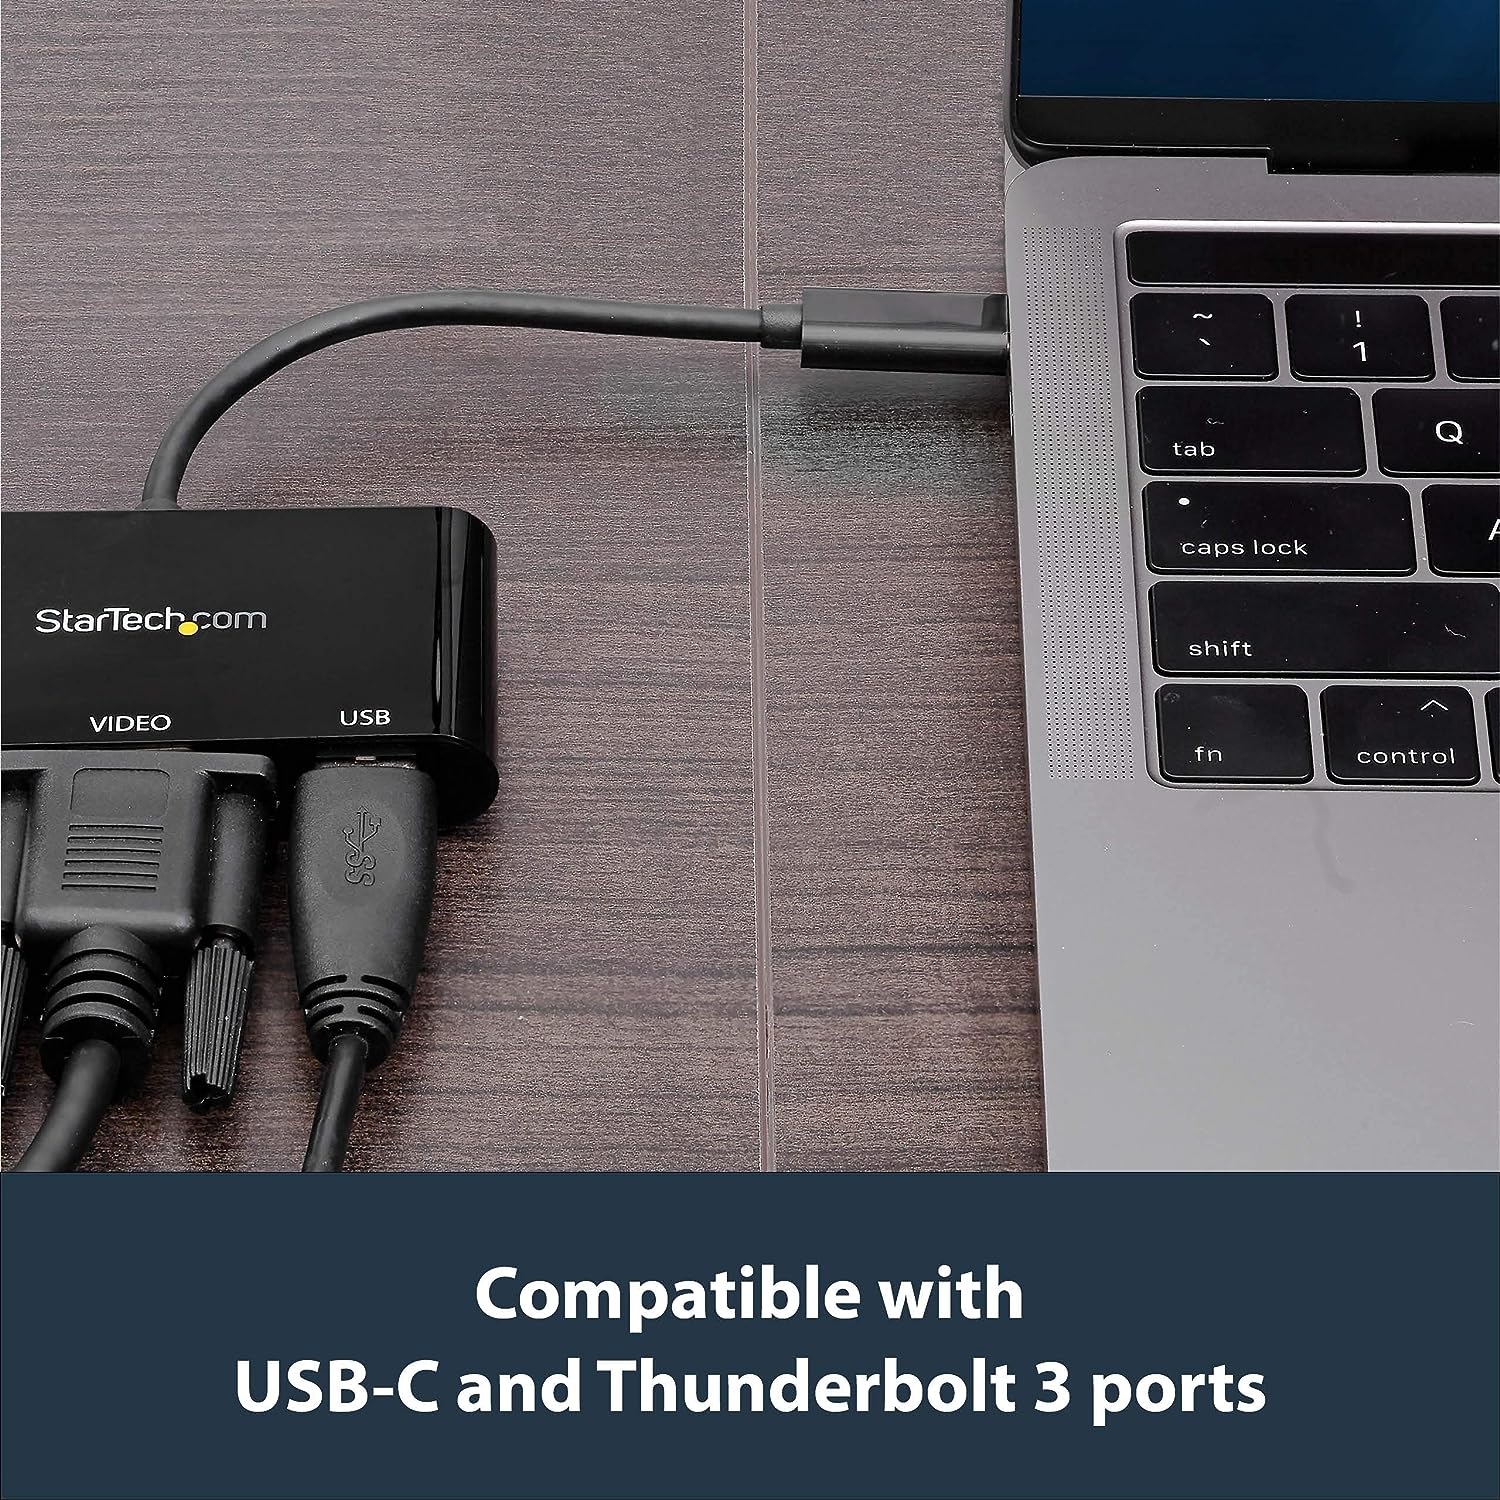 StarTech.com USB-C VGA Multiport Adapter